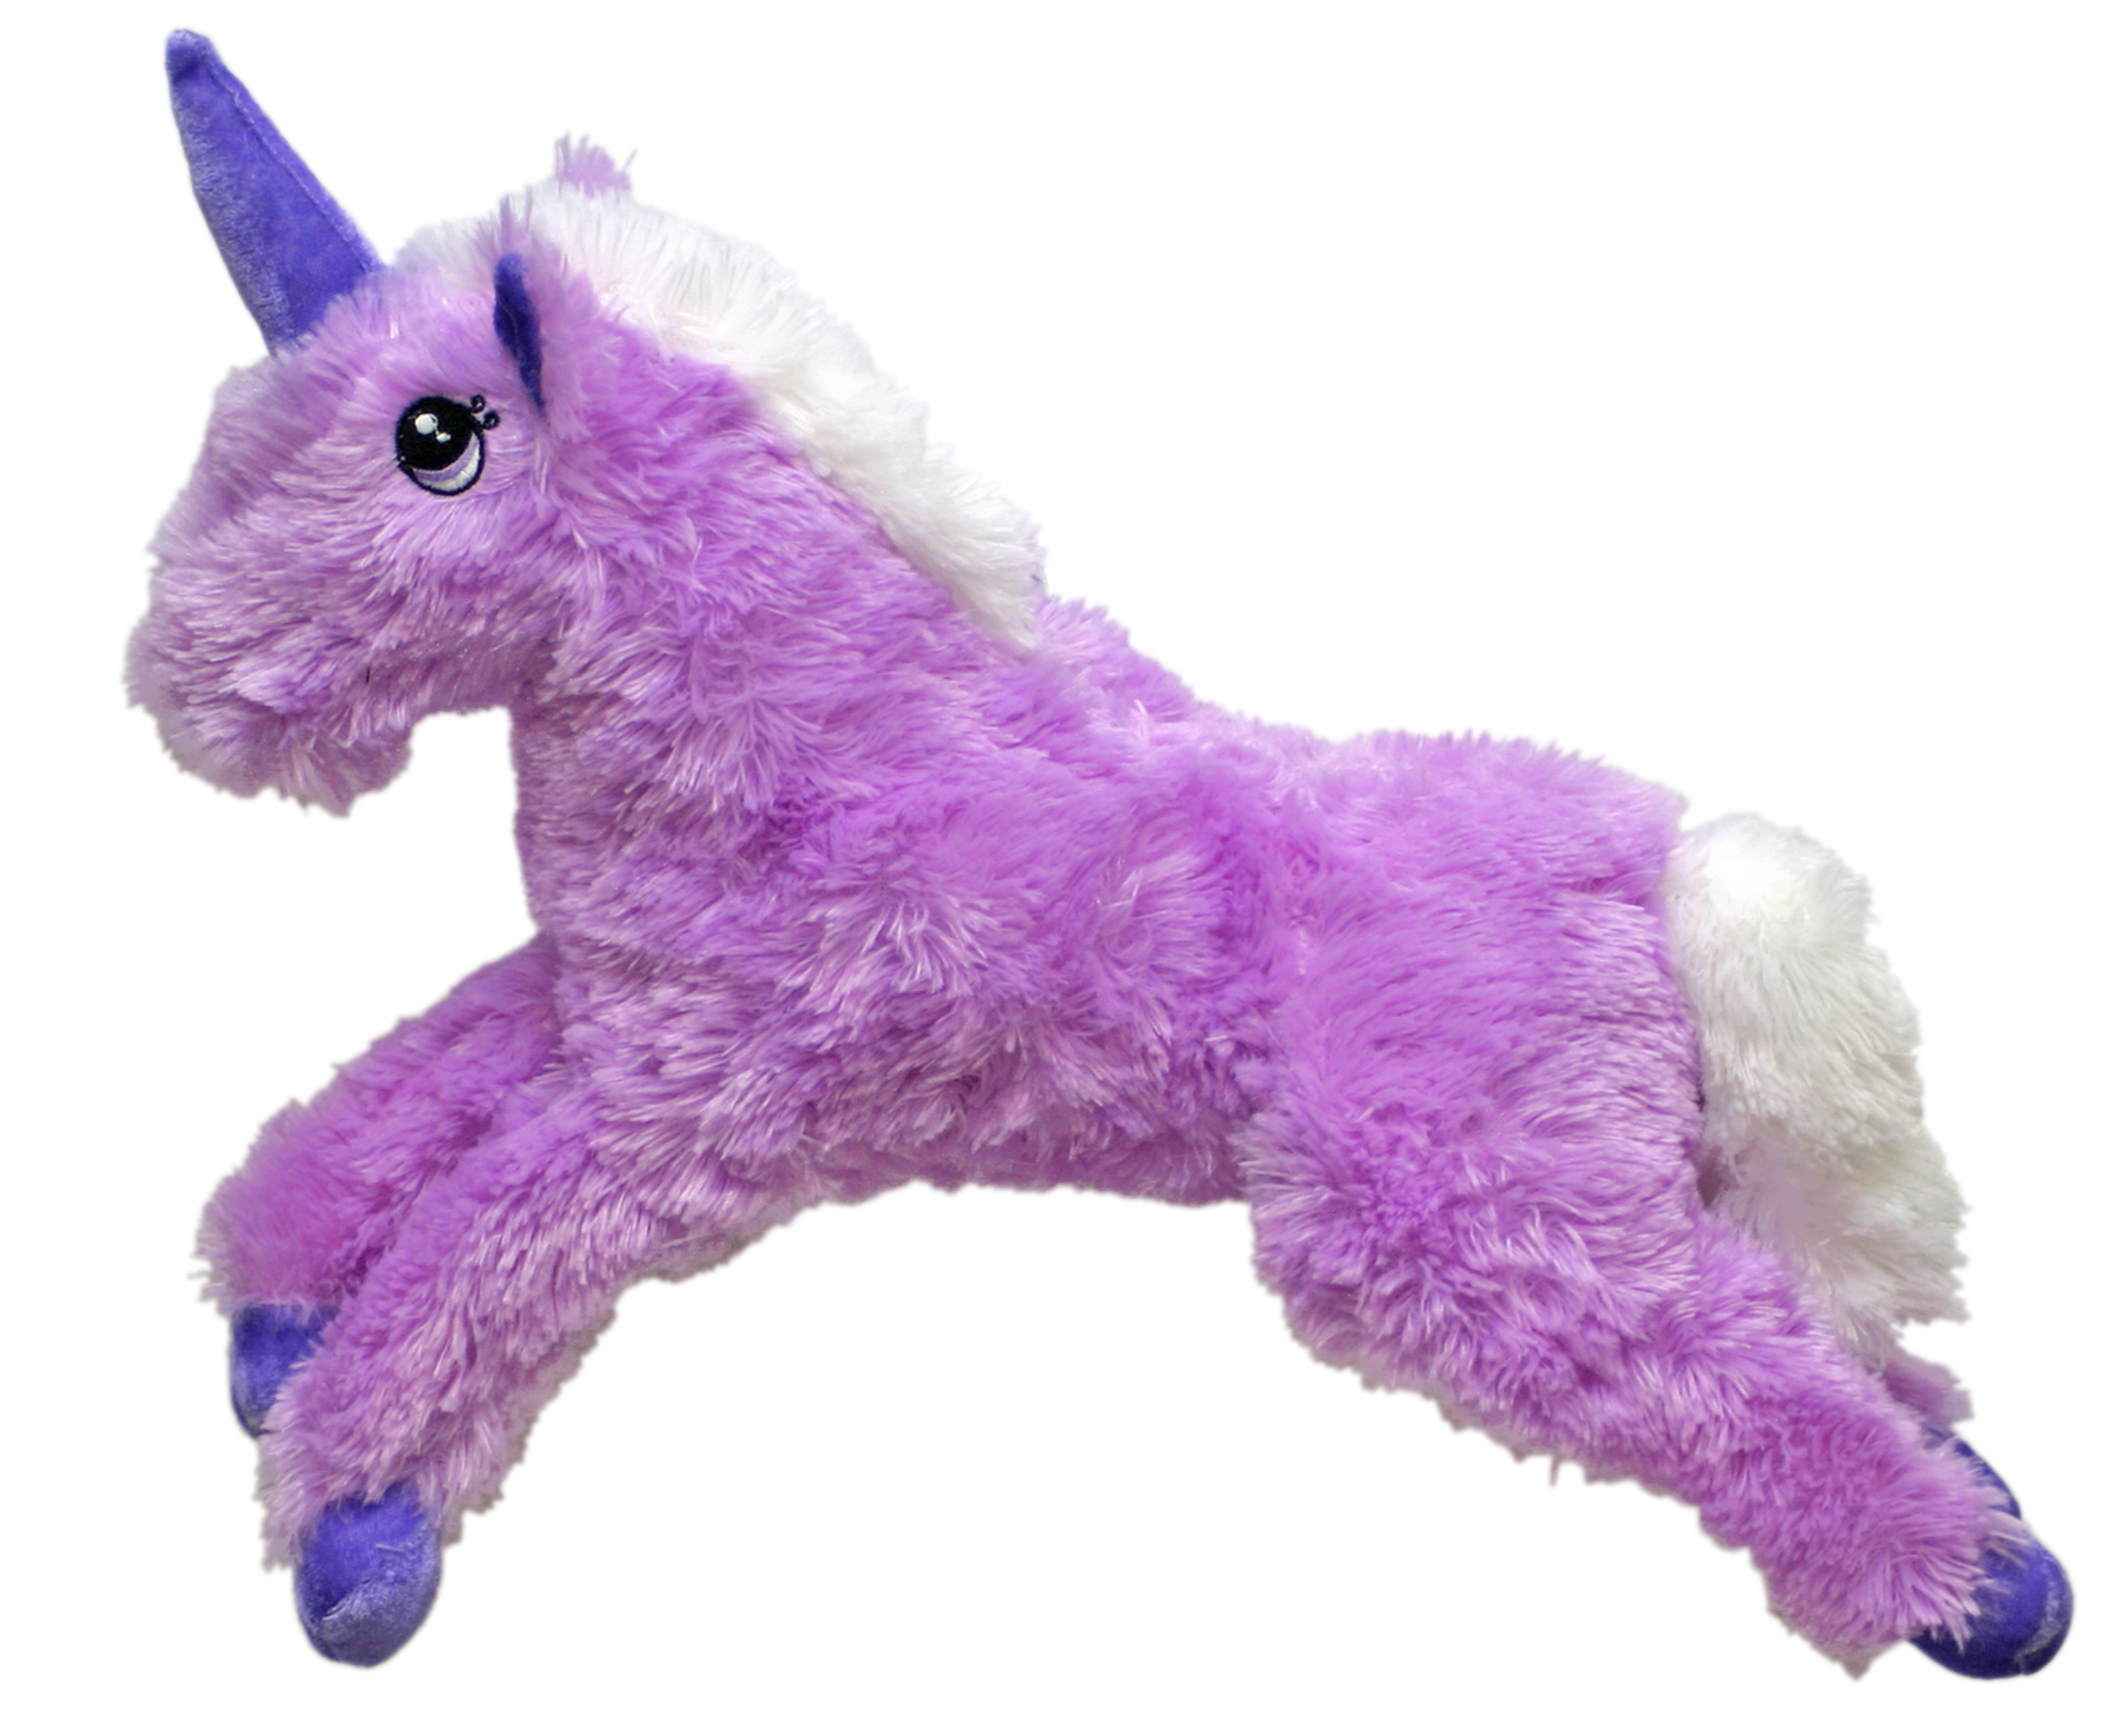 Whimsy & Charm Valentine's Day Sweatheart Love 22" Unicorn Stuffed Animal Plush Toy Soft & Fluffy - Purple - image 5 of 6